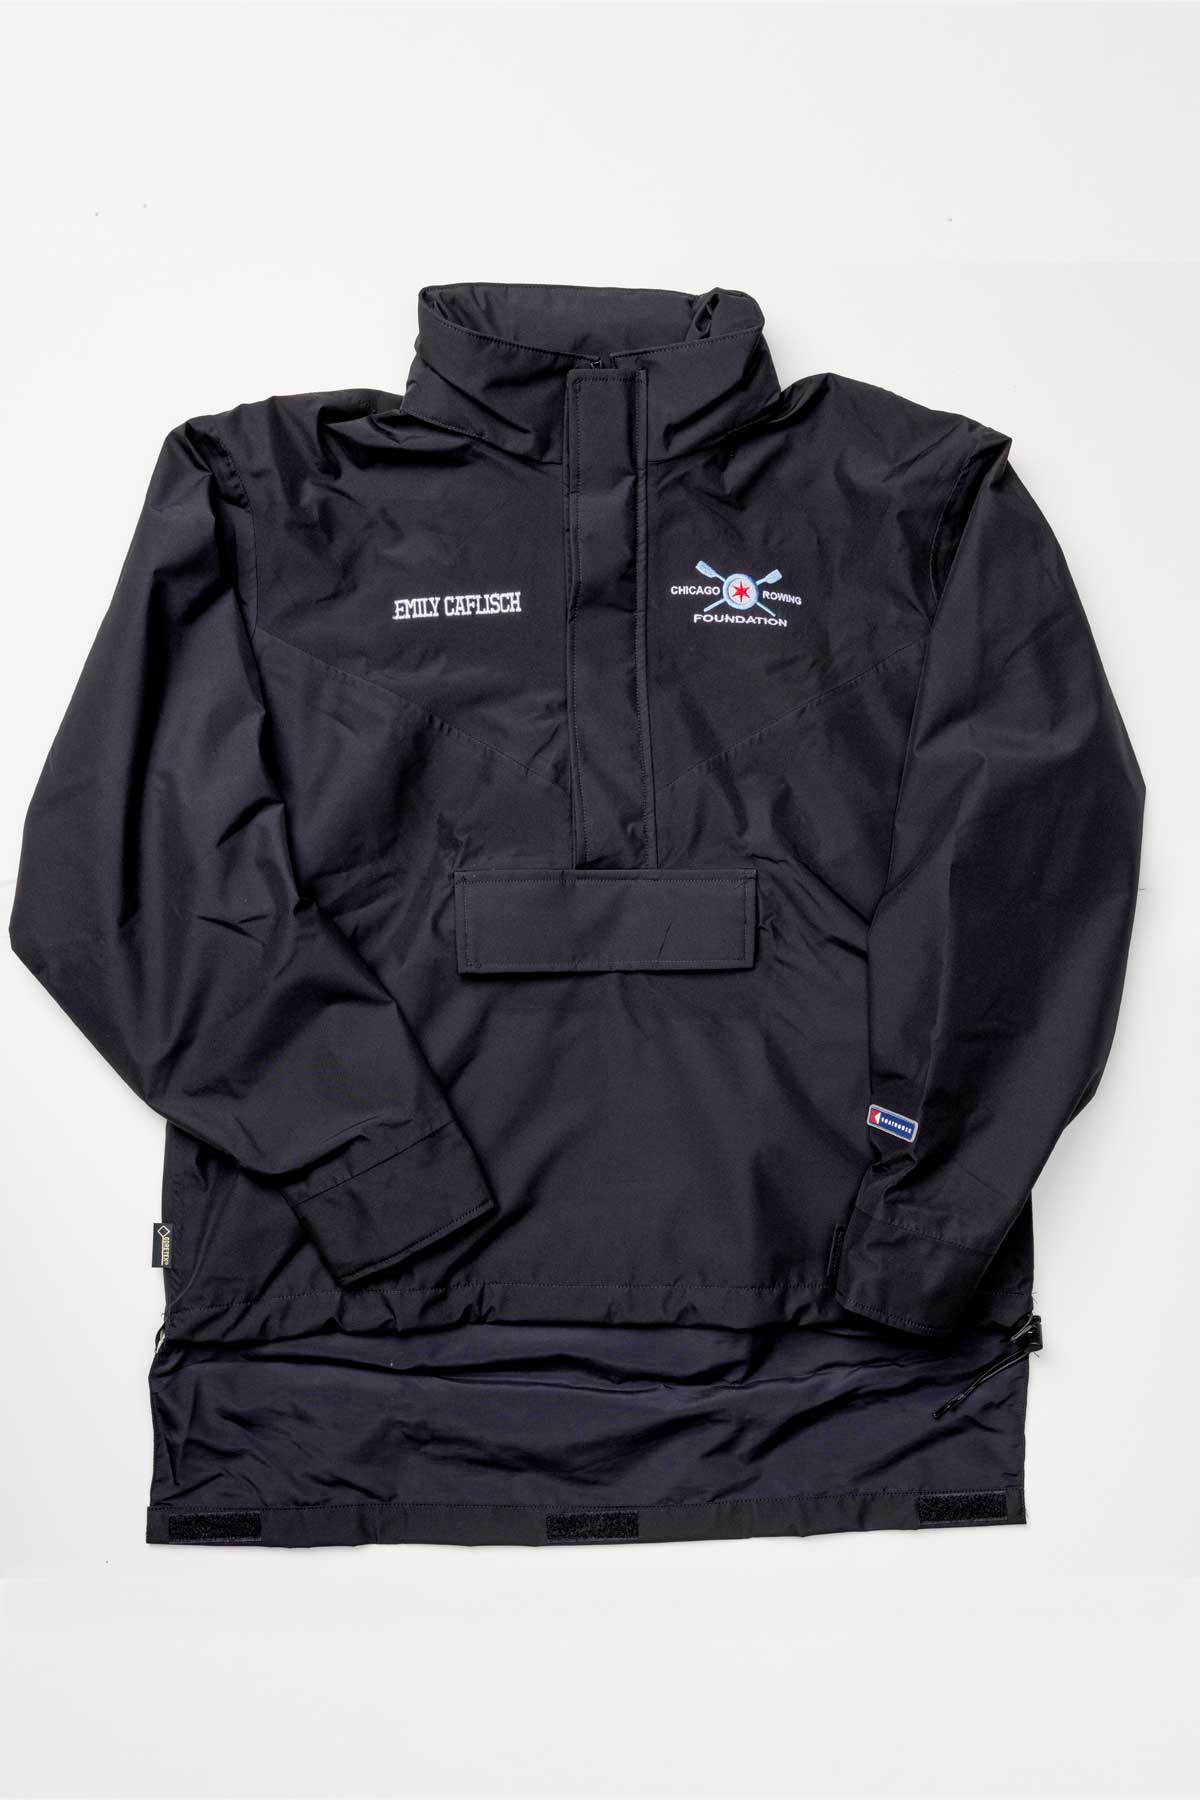 Chicago Rowing Foundation GORE-TEX® Stevenson Waterproof Jacket Medium